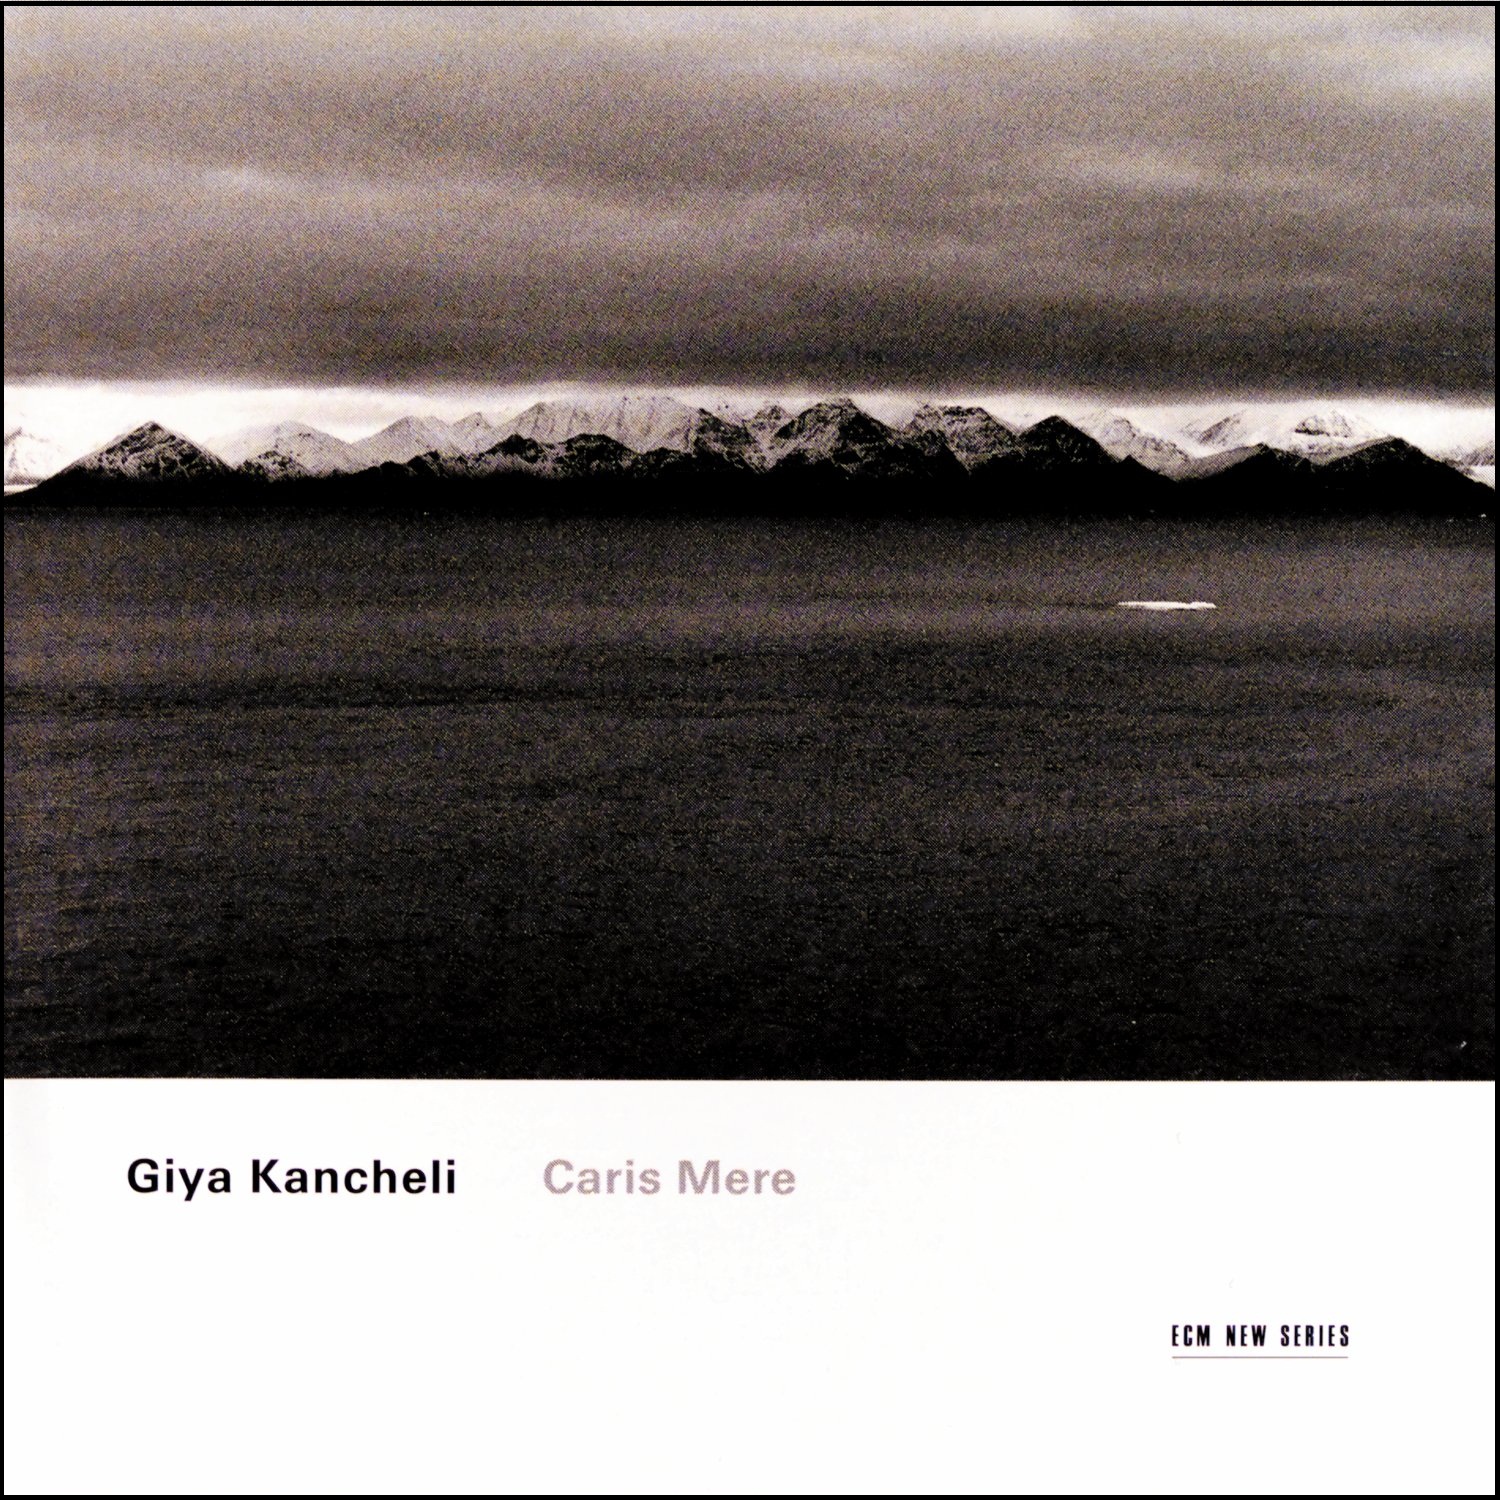 <p>Caris Mere<br />
Duo by Giya Kancheli</p>
